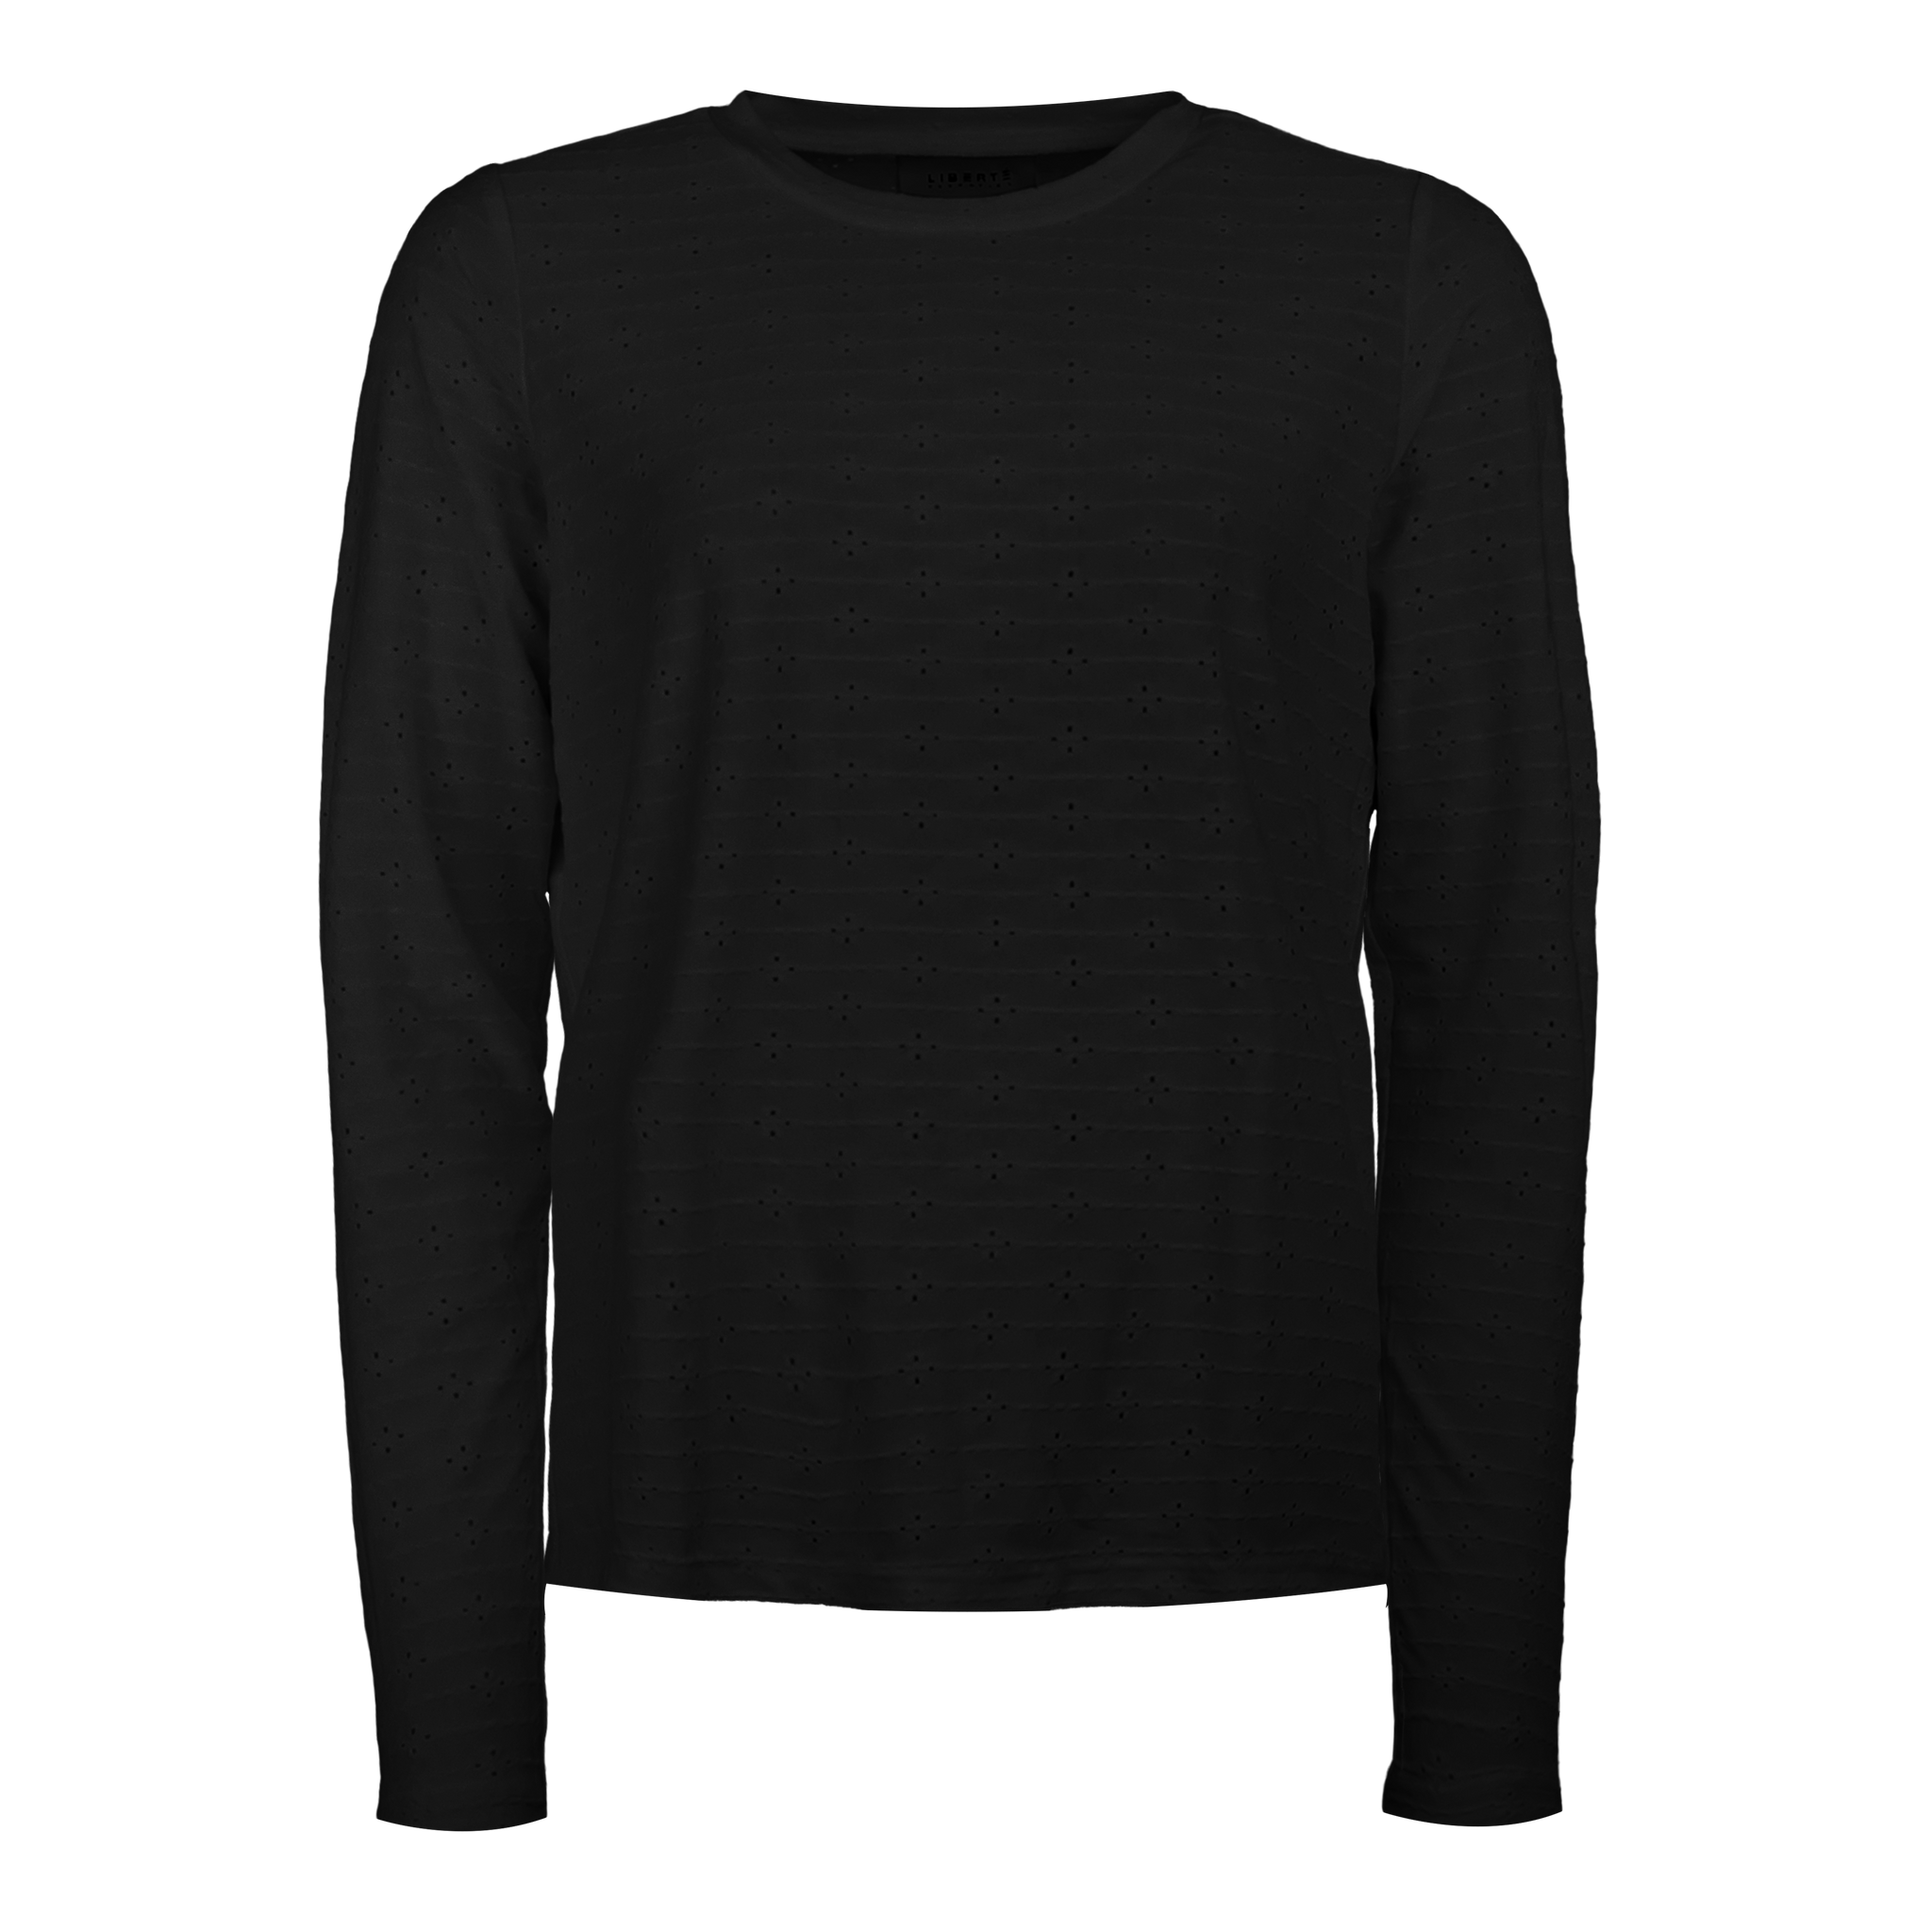 Liberté - Femmi LS T-shirt, 21597 - Black